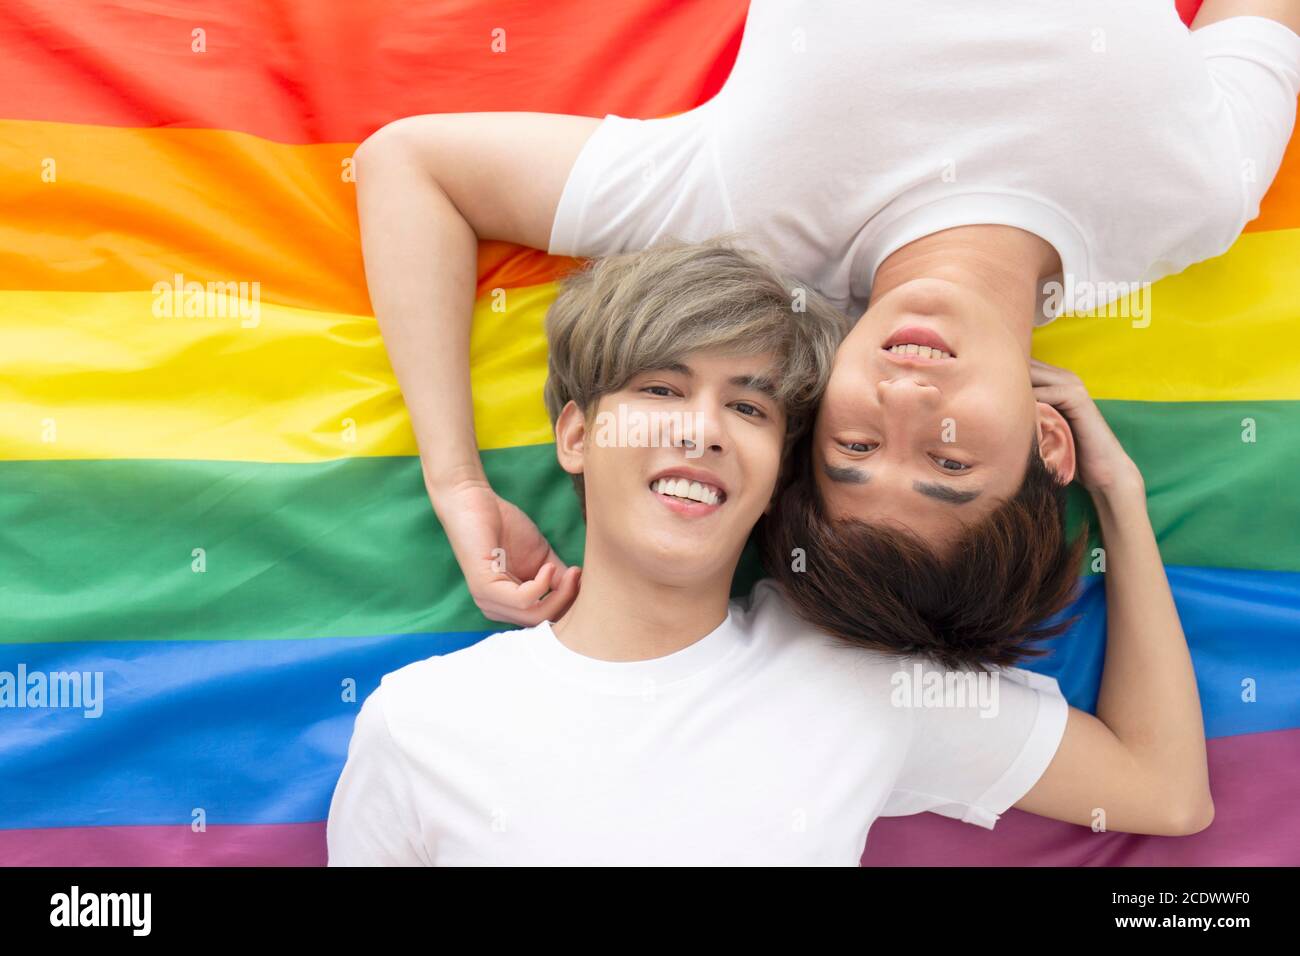 Young gay asian boys